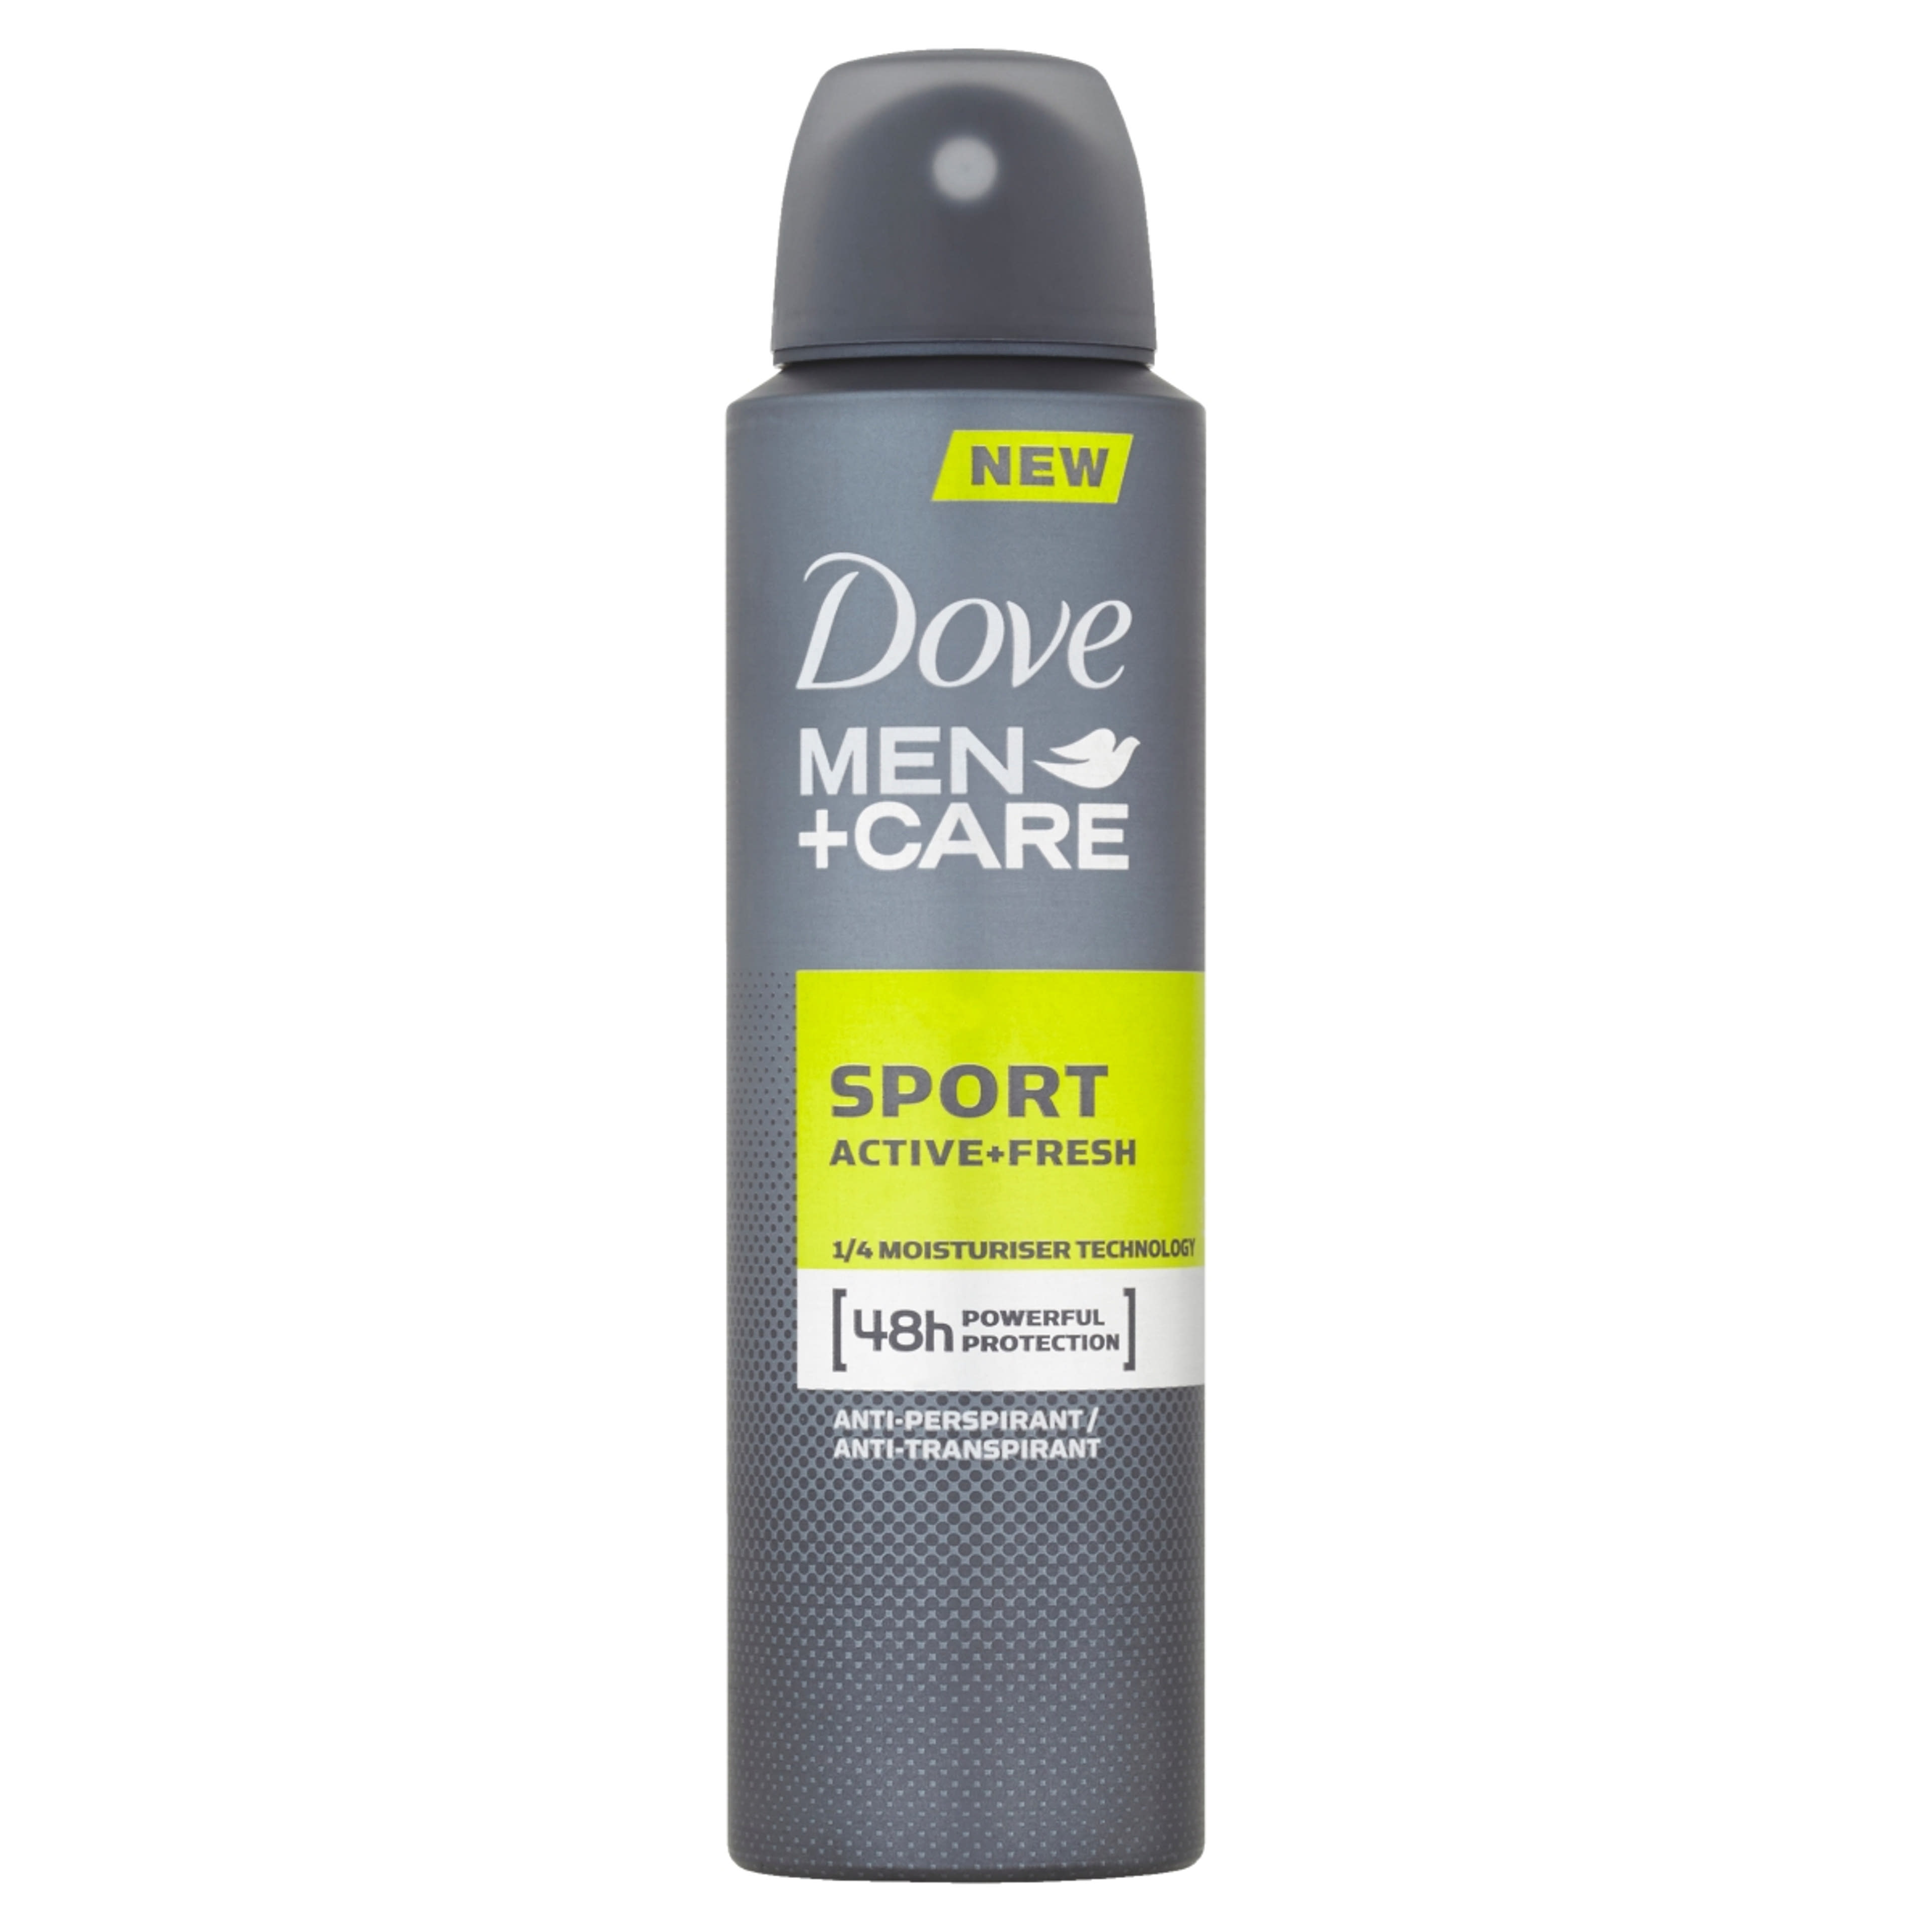 Dove deo men+care sport active fresh - 150 ml